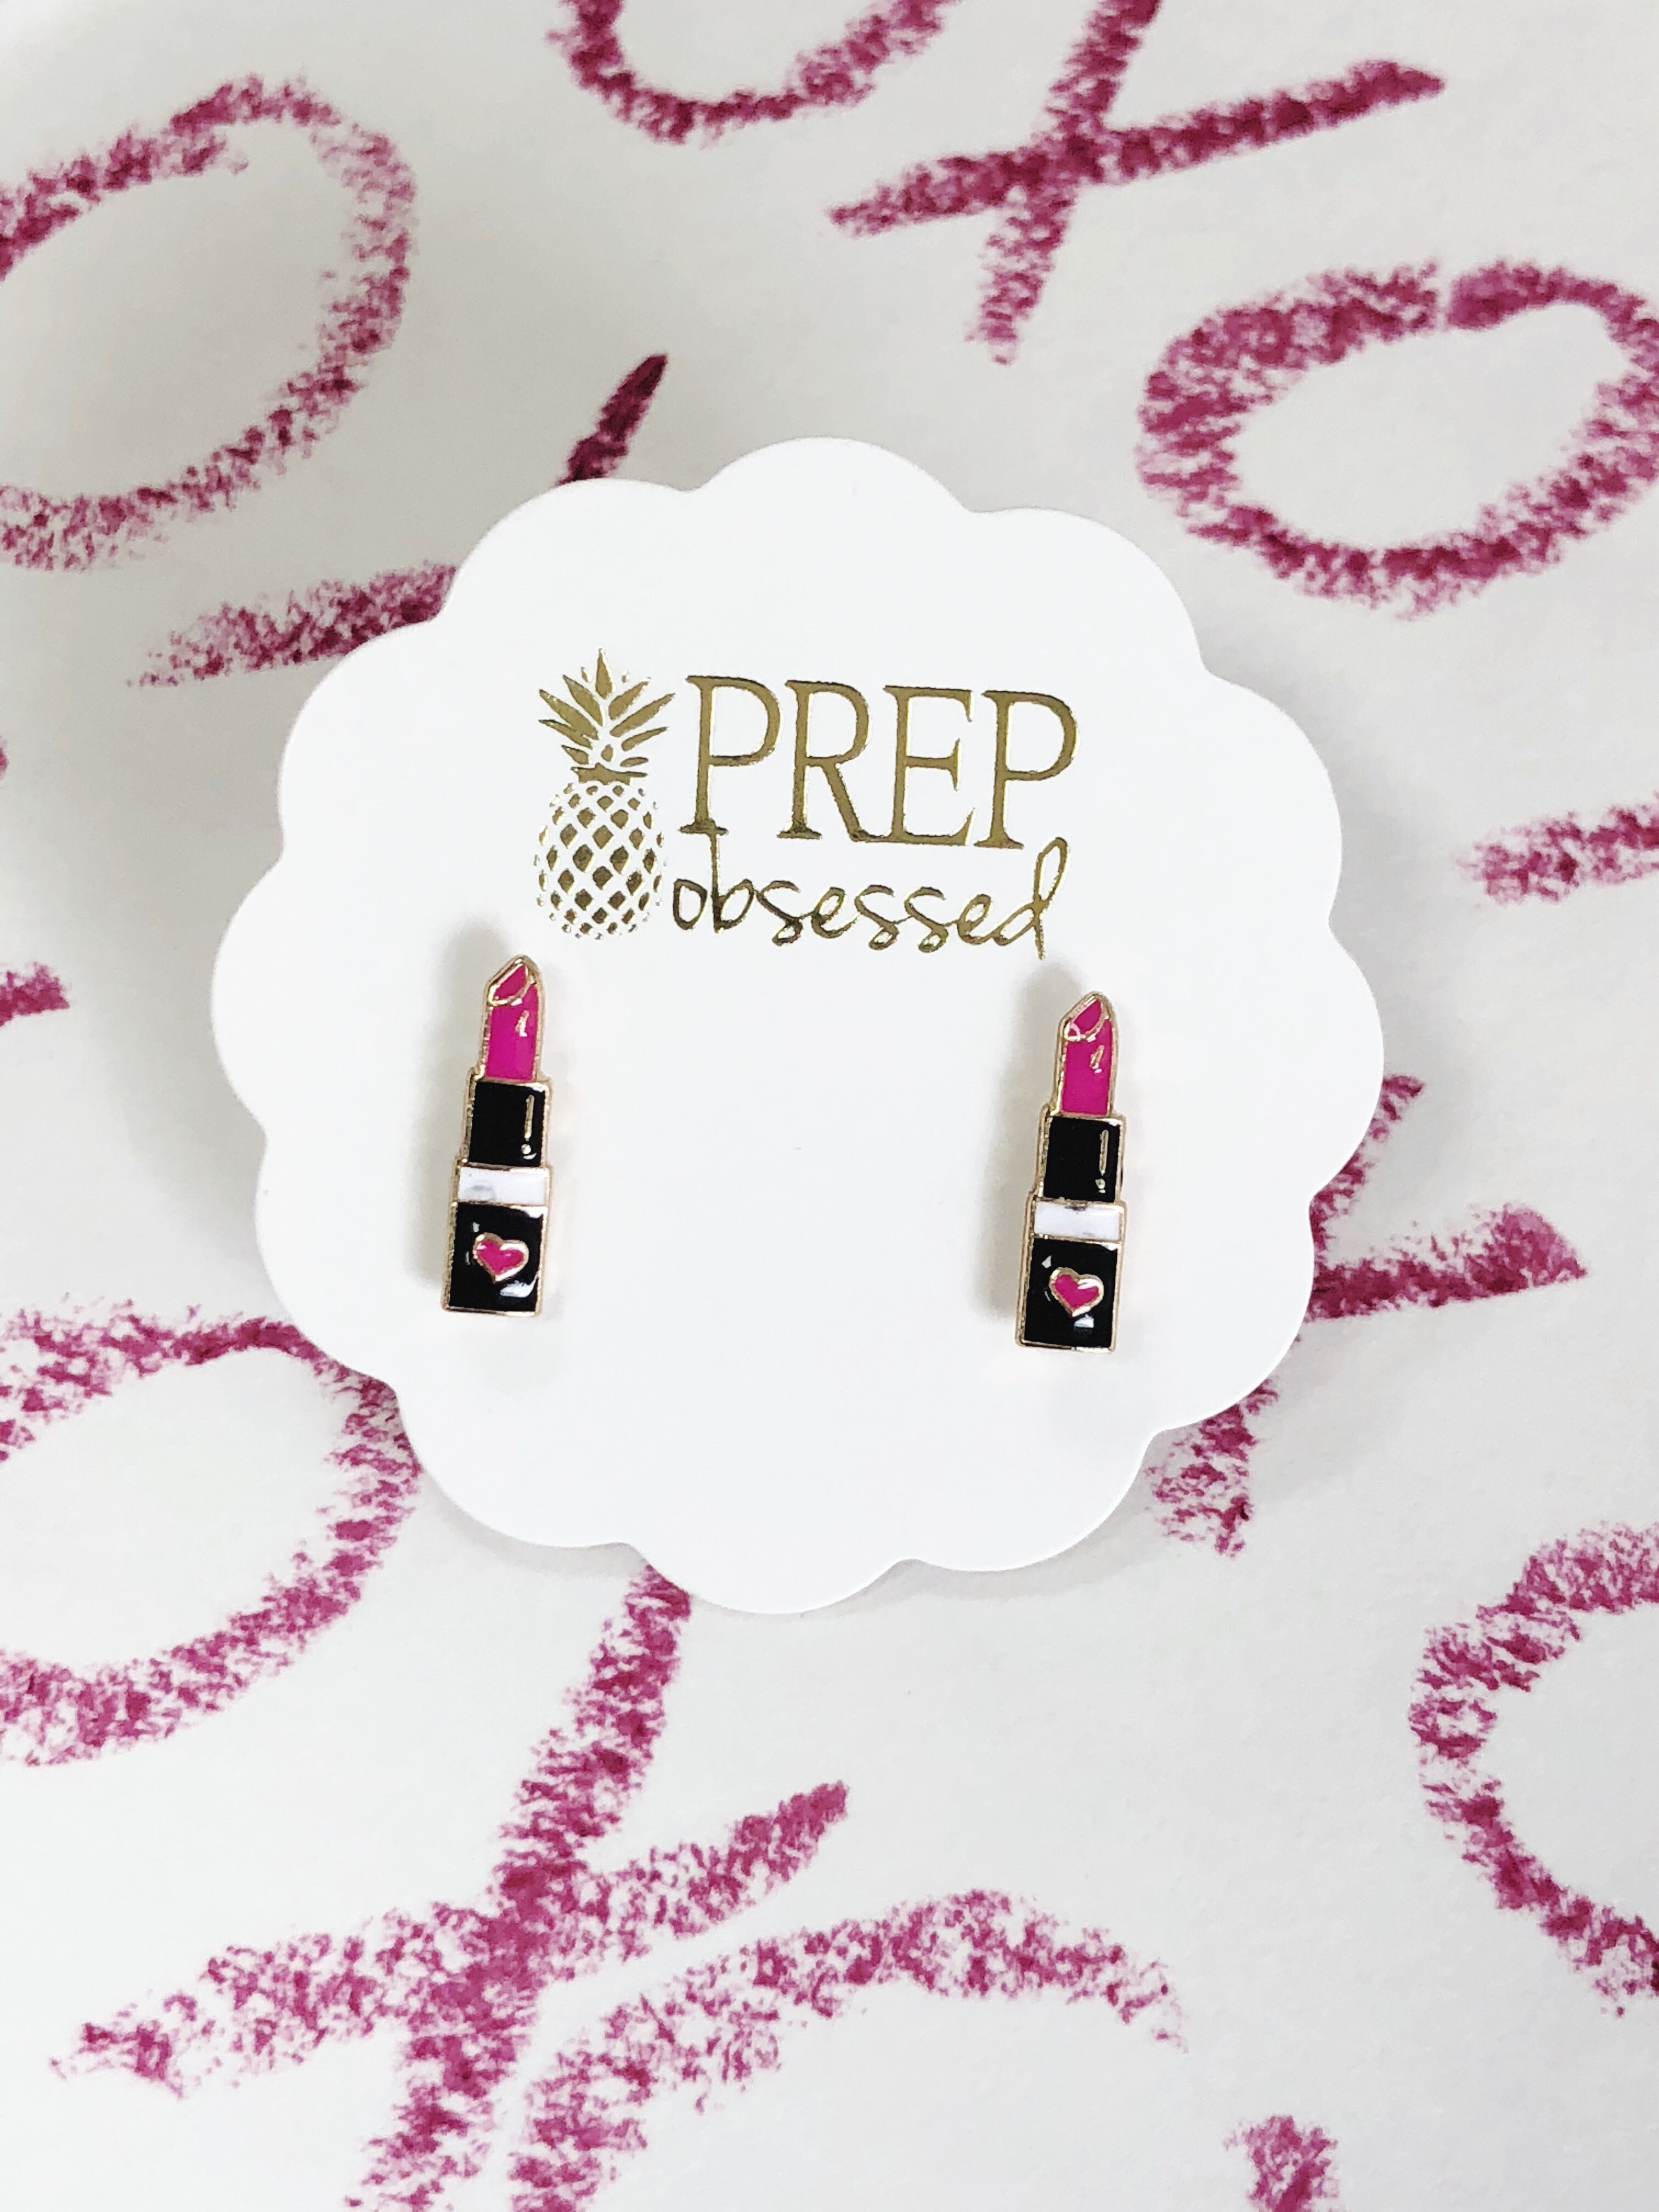 Lipstick Stud Earrings at Prep Obsessed